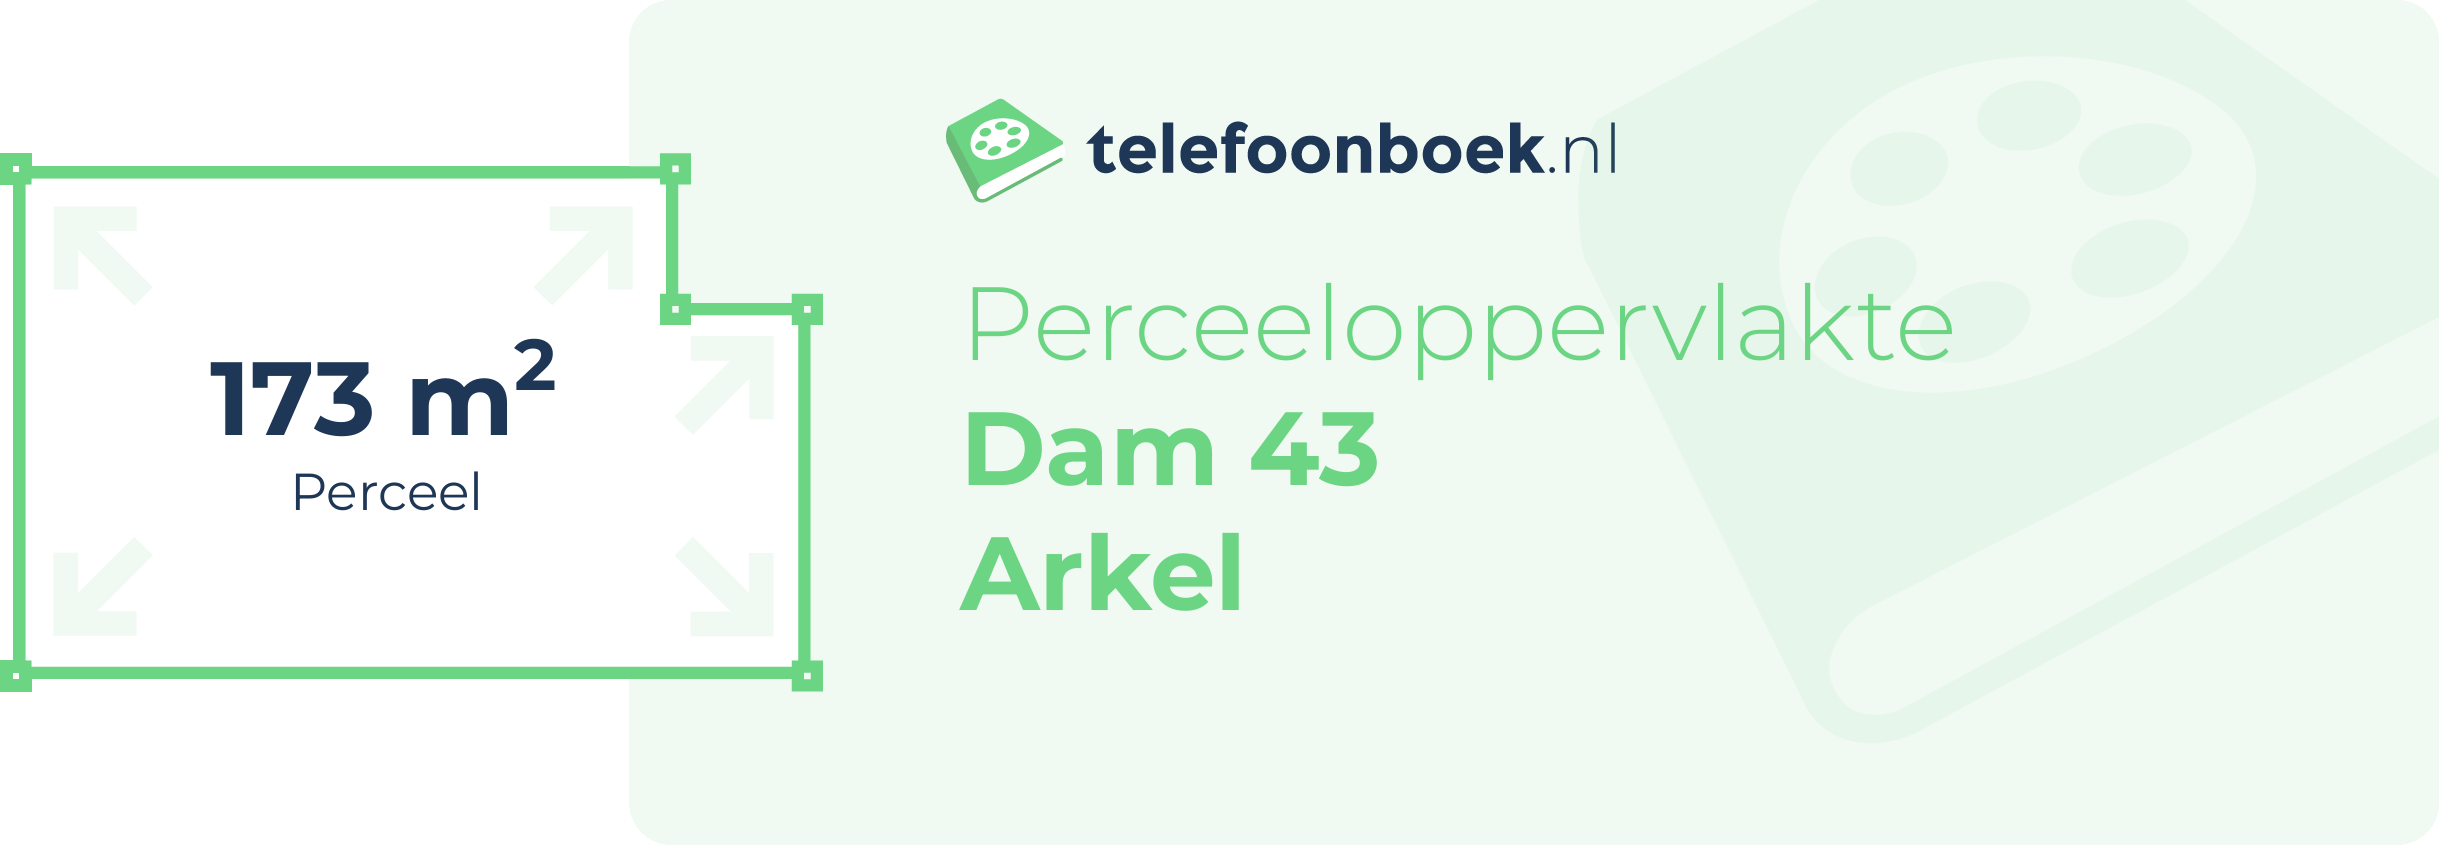 Perceeloppervlakte Dam 43 Arkel